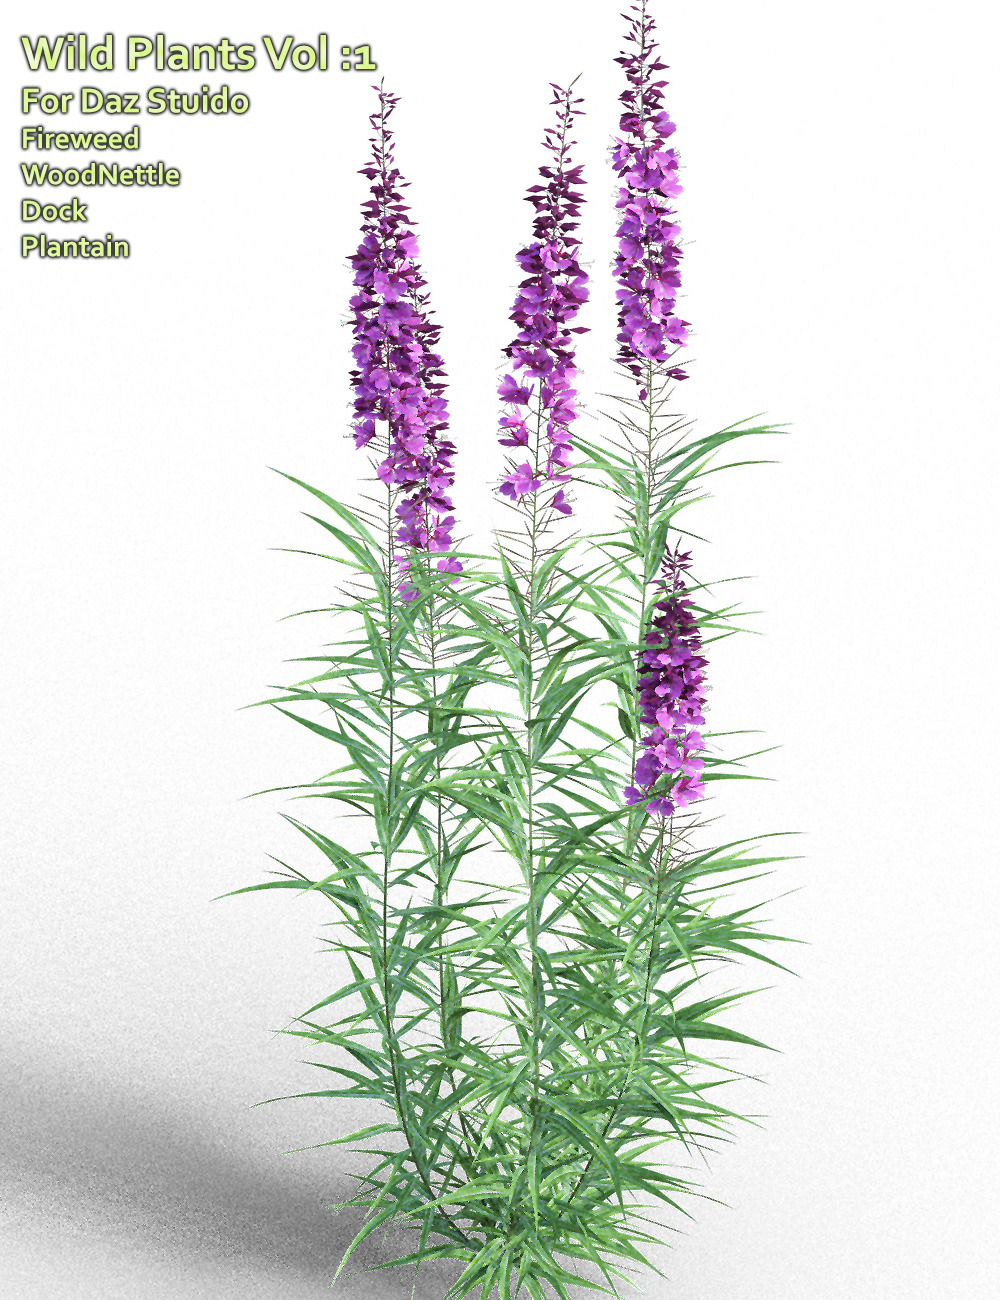 Wild Plants Vol: 1 for Daz Studio by: MartinJFrost, 3D Models by Daz 3D